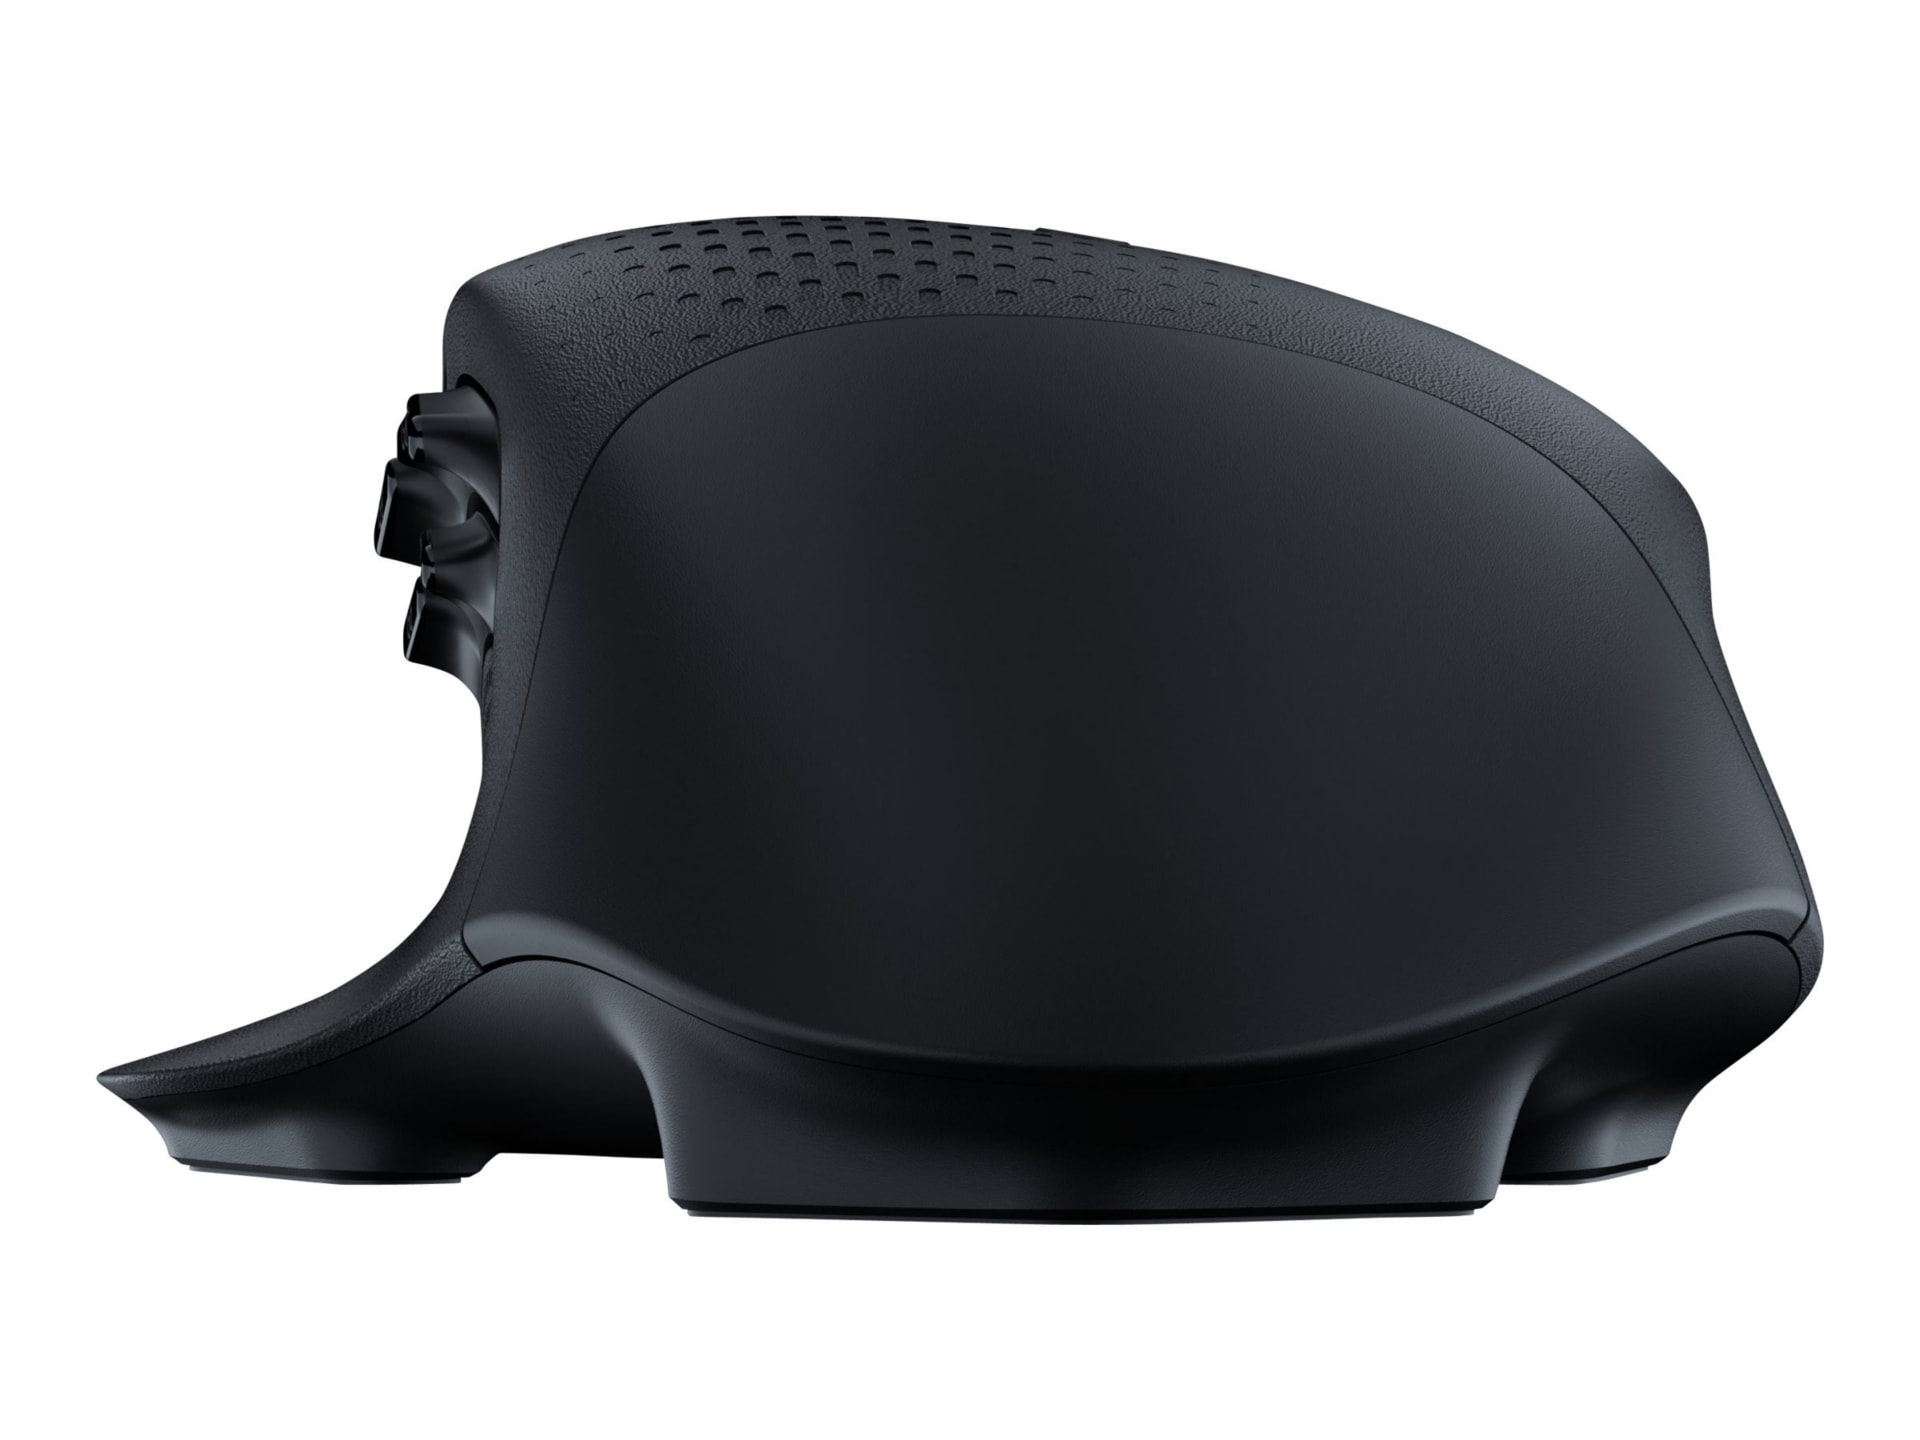 Logitech G604 Lightspeed Wireless Gaming Mouse Mouse Bluetooth Lightsp 910